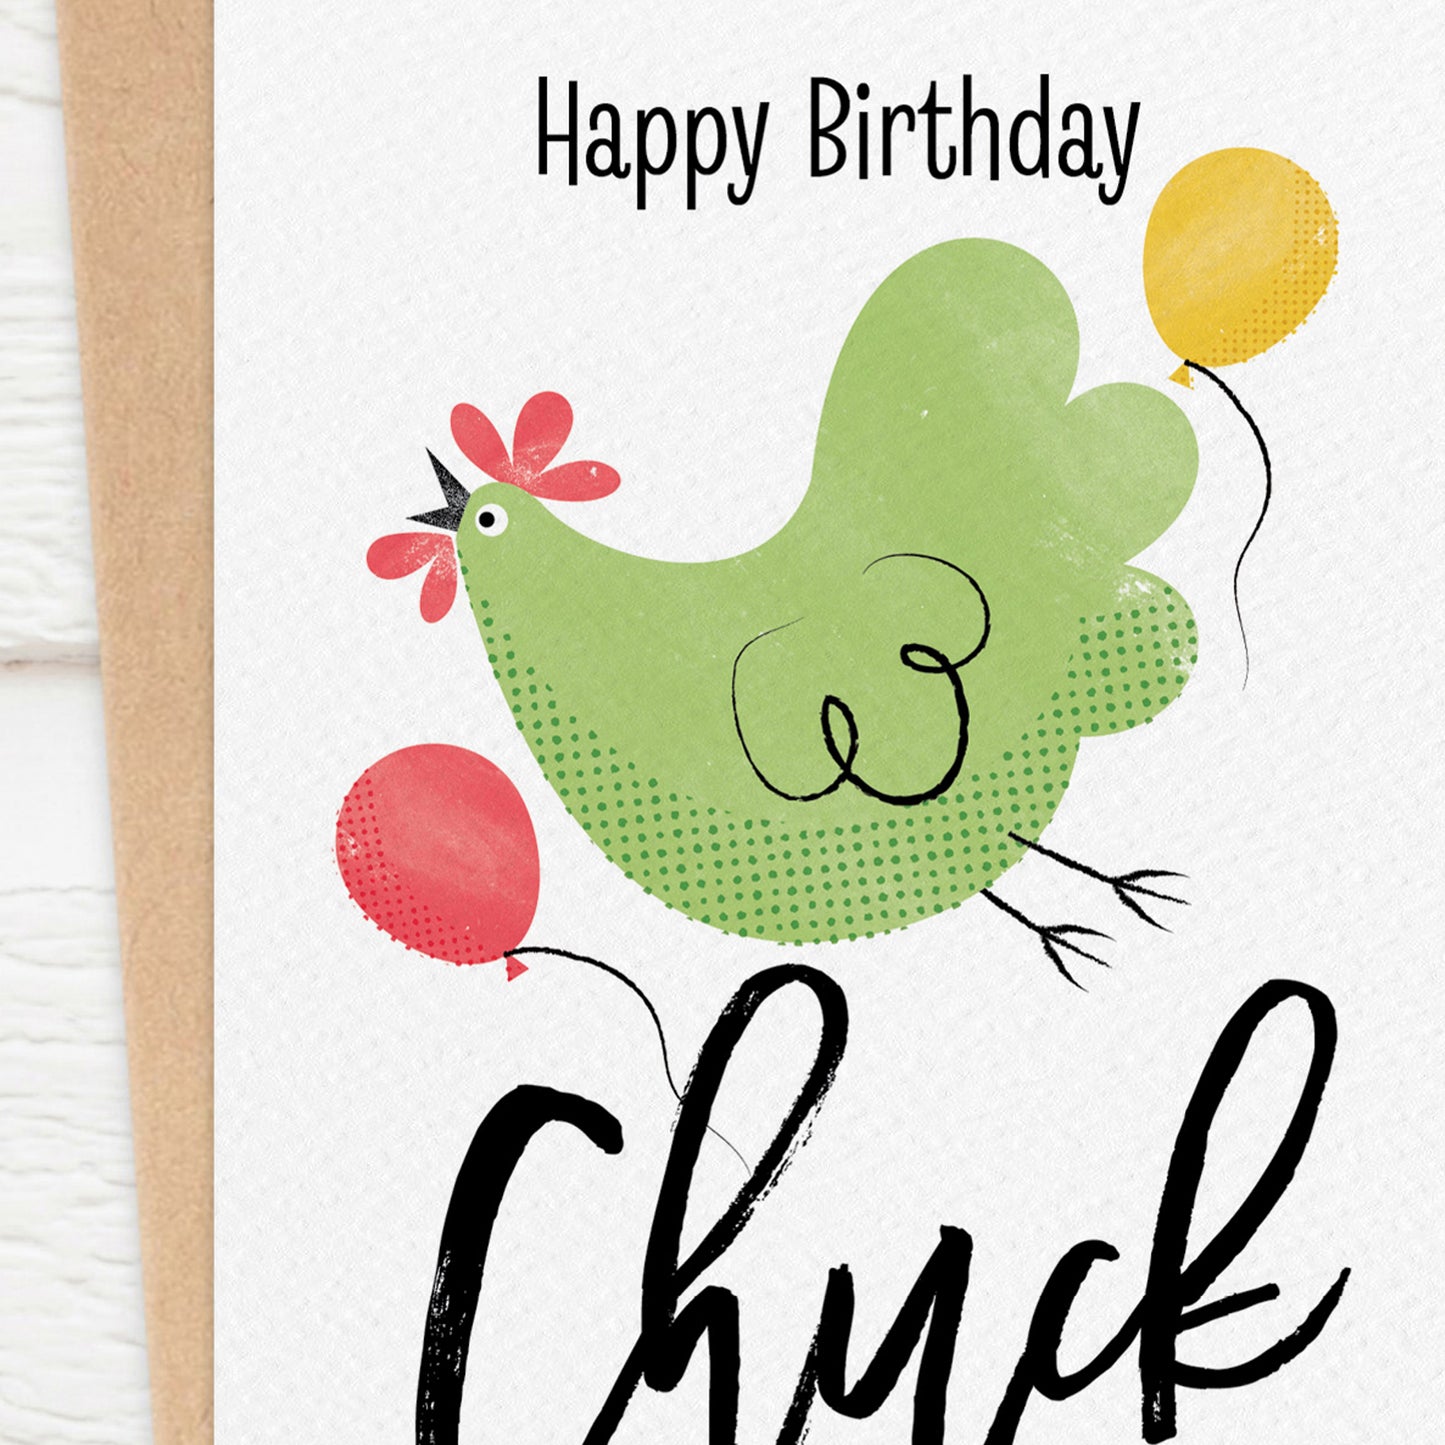 Sketchy Chuck Birthday Card